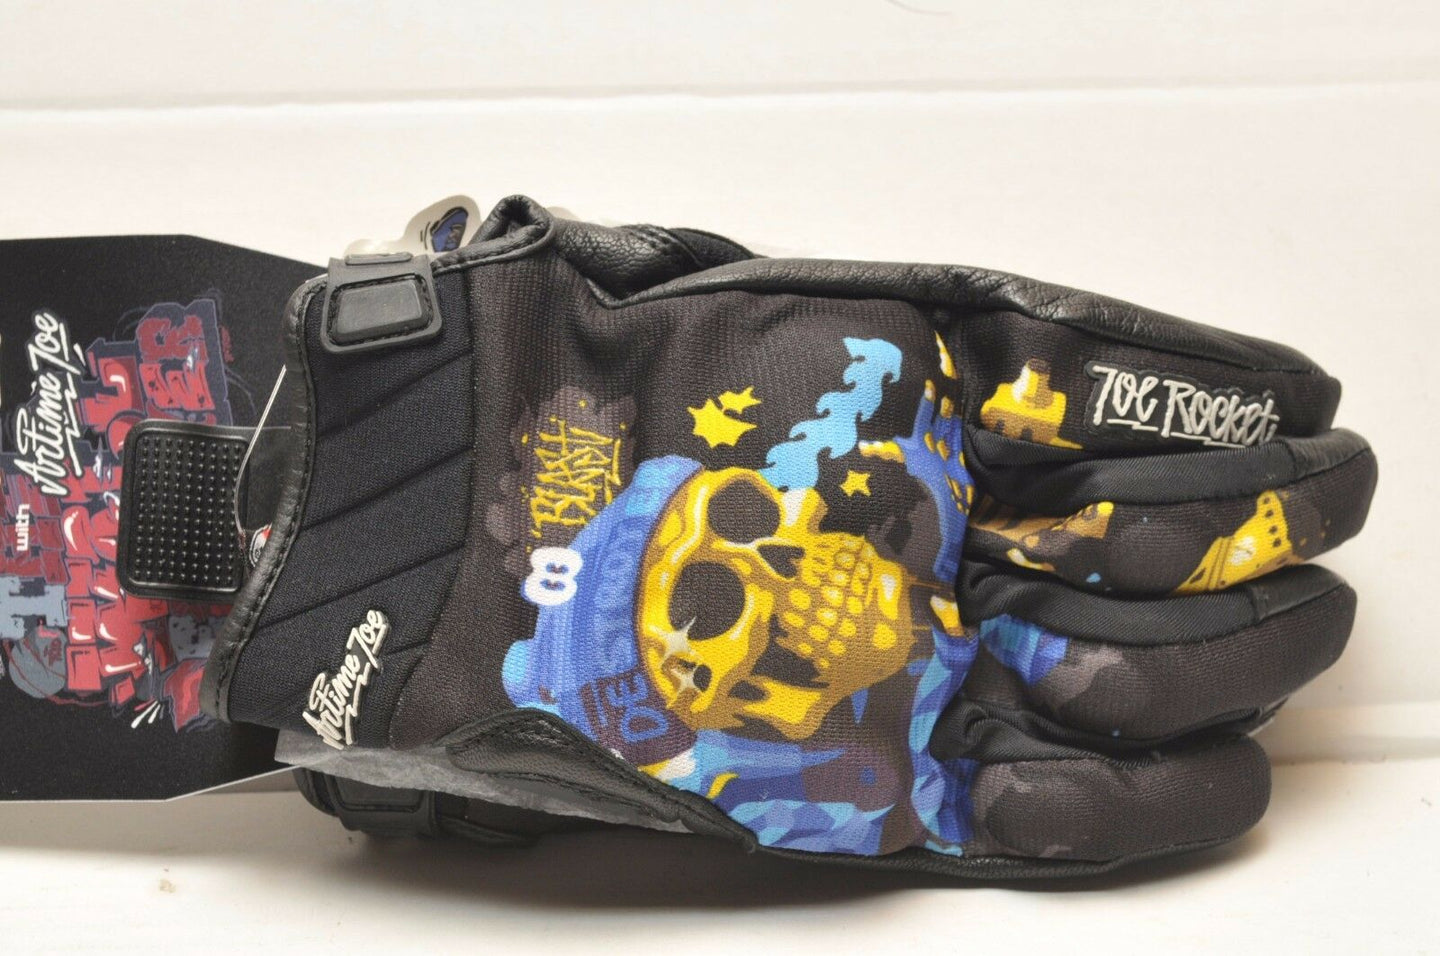 Joe Rocket Airtime Destroy Motorcycle Gloves - Men's - Touch screen